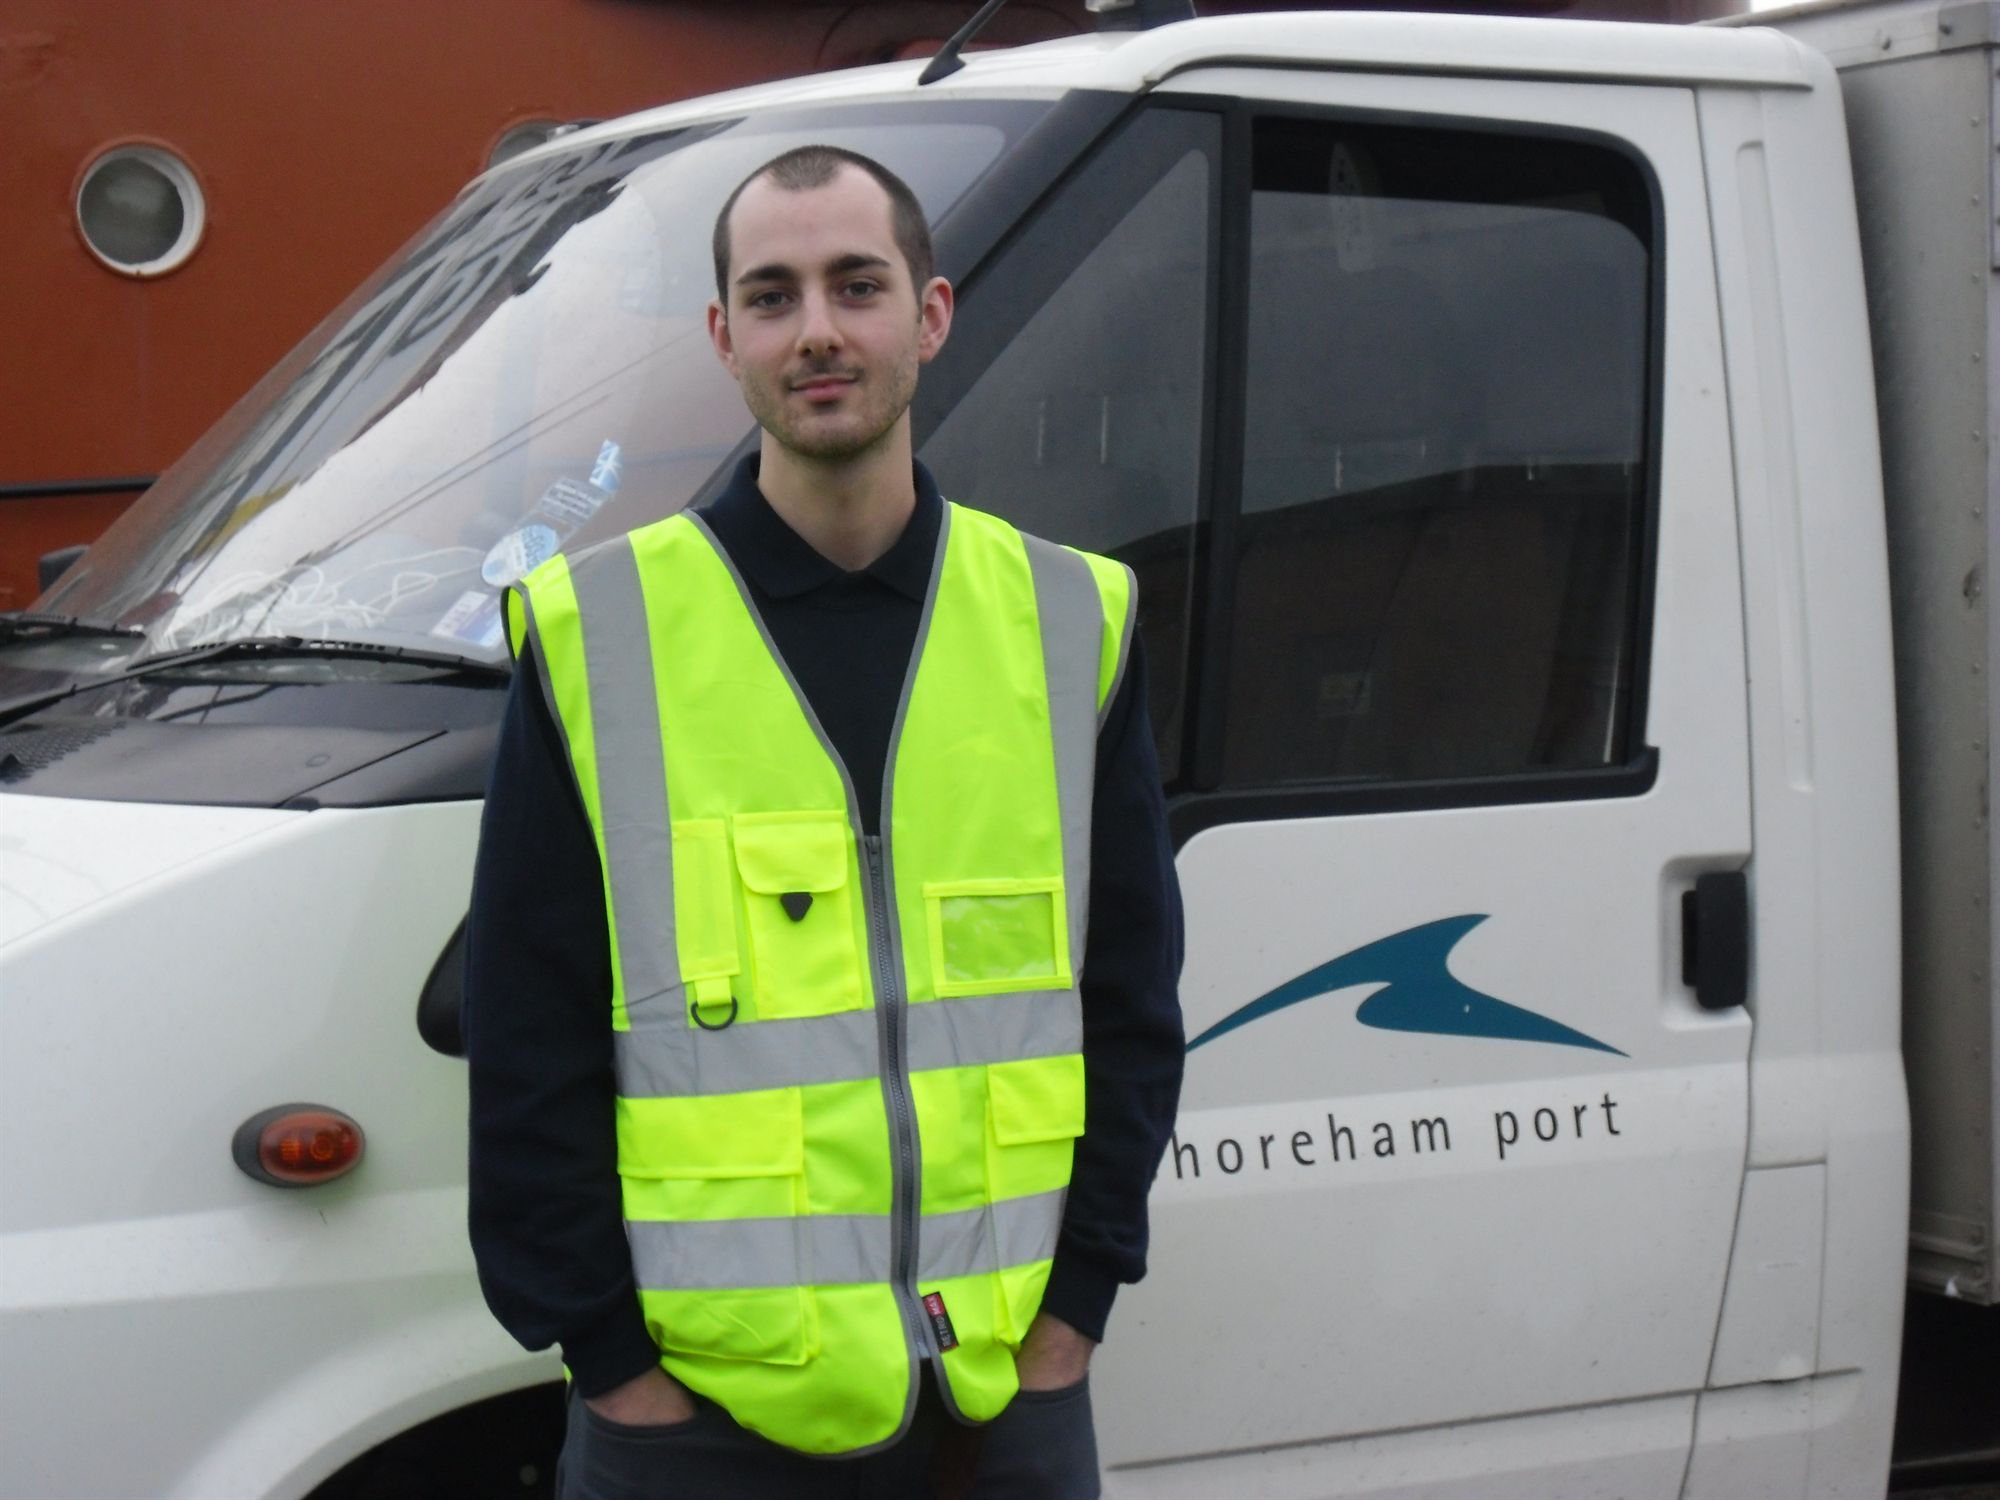 Shoreham Port welcomes new recruit to setup system